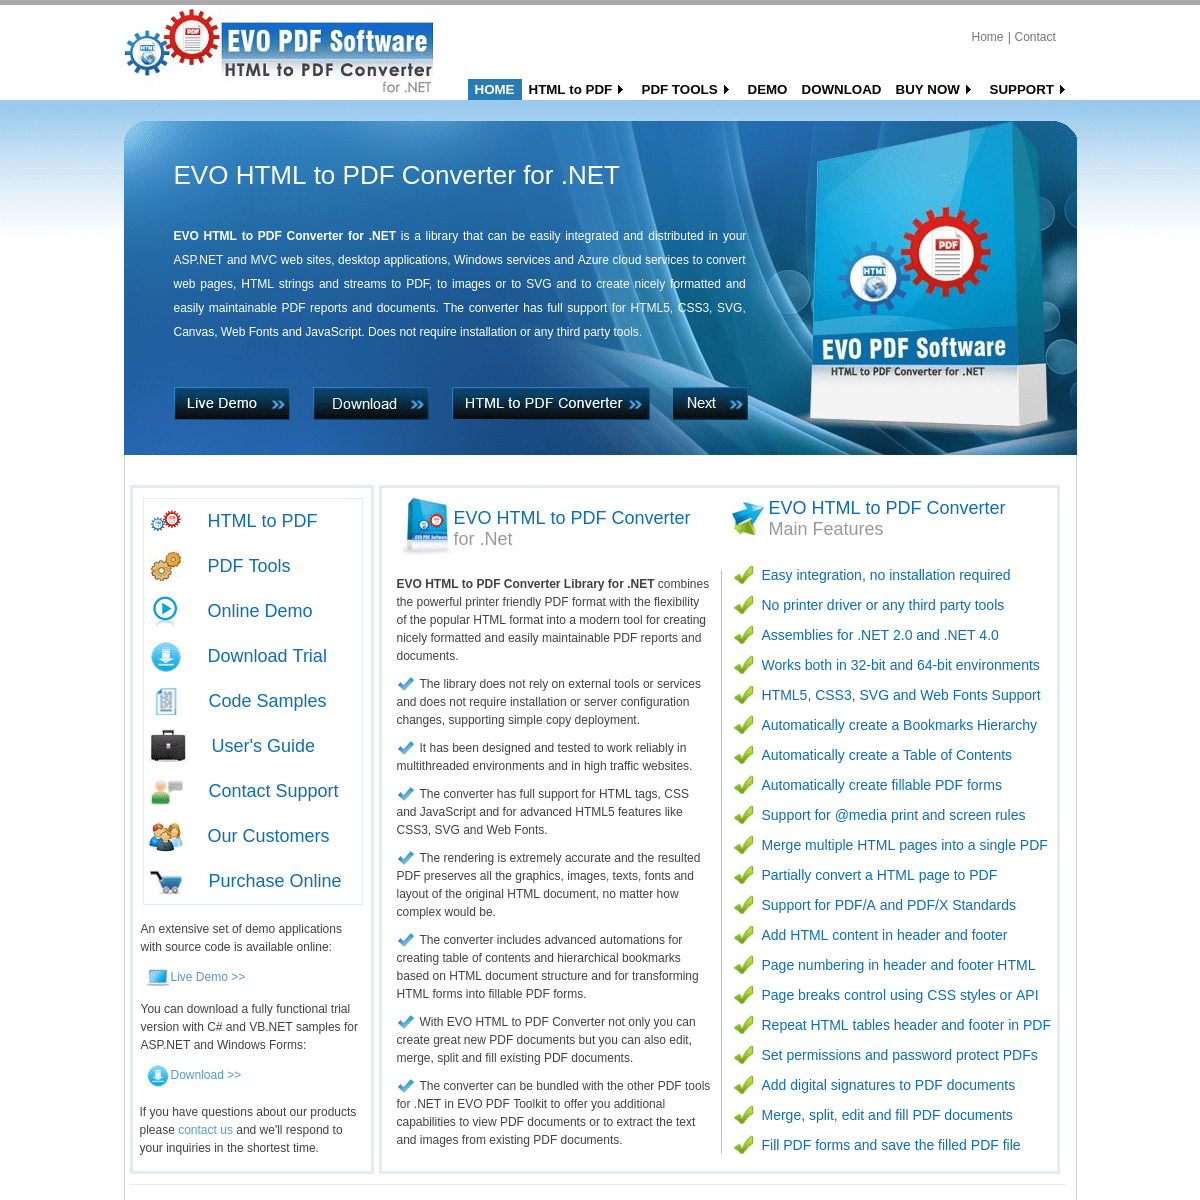 A complete backup of evopdf.com